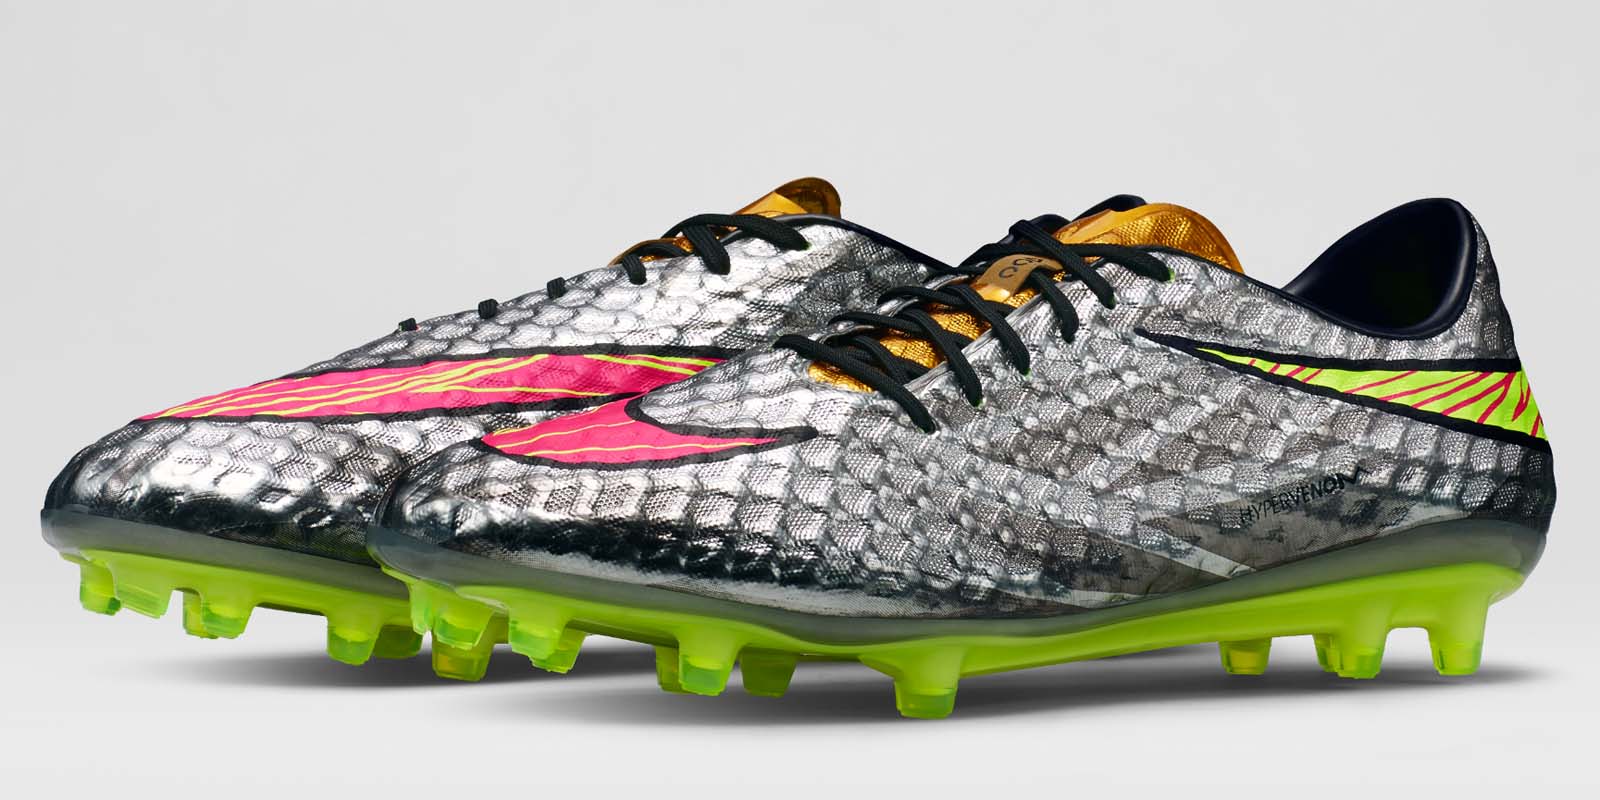 Silver Neymar Nike Hypervenom Boots Released   Liquid Diamond   Footy    football boots 2016 nike